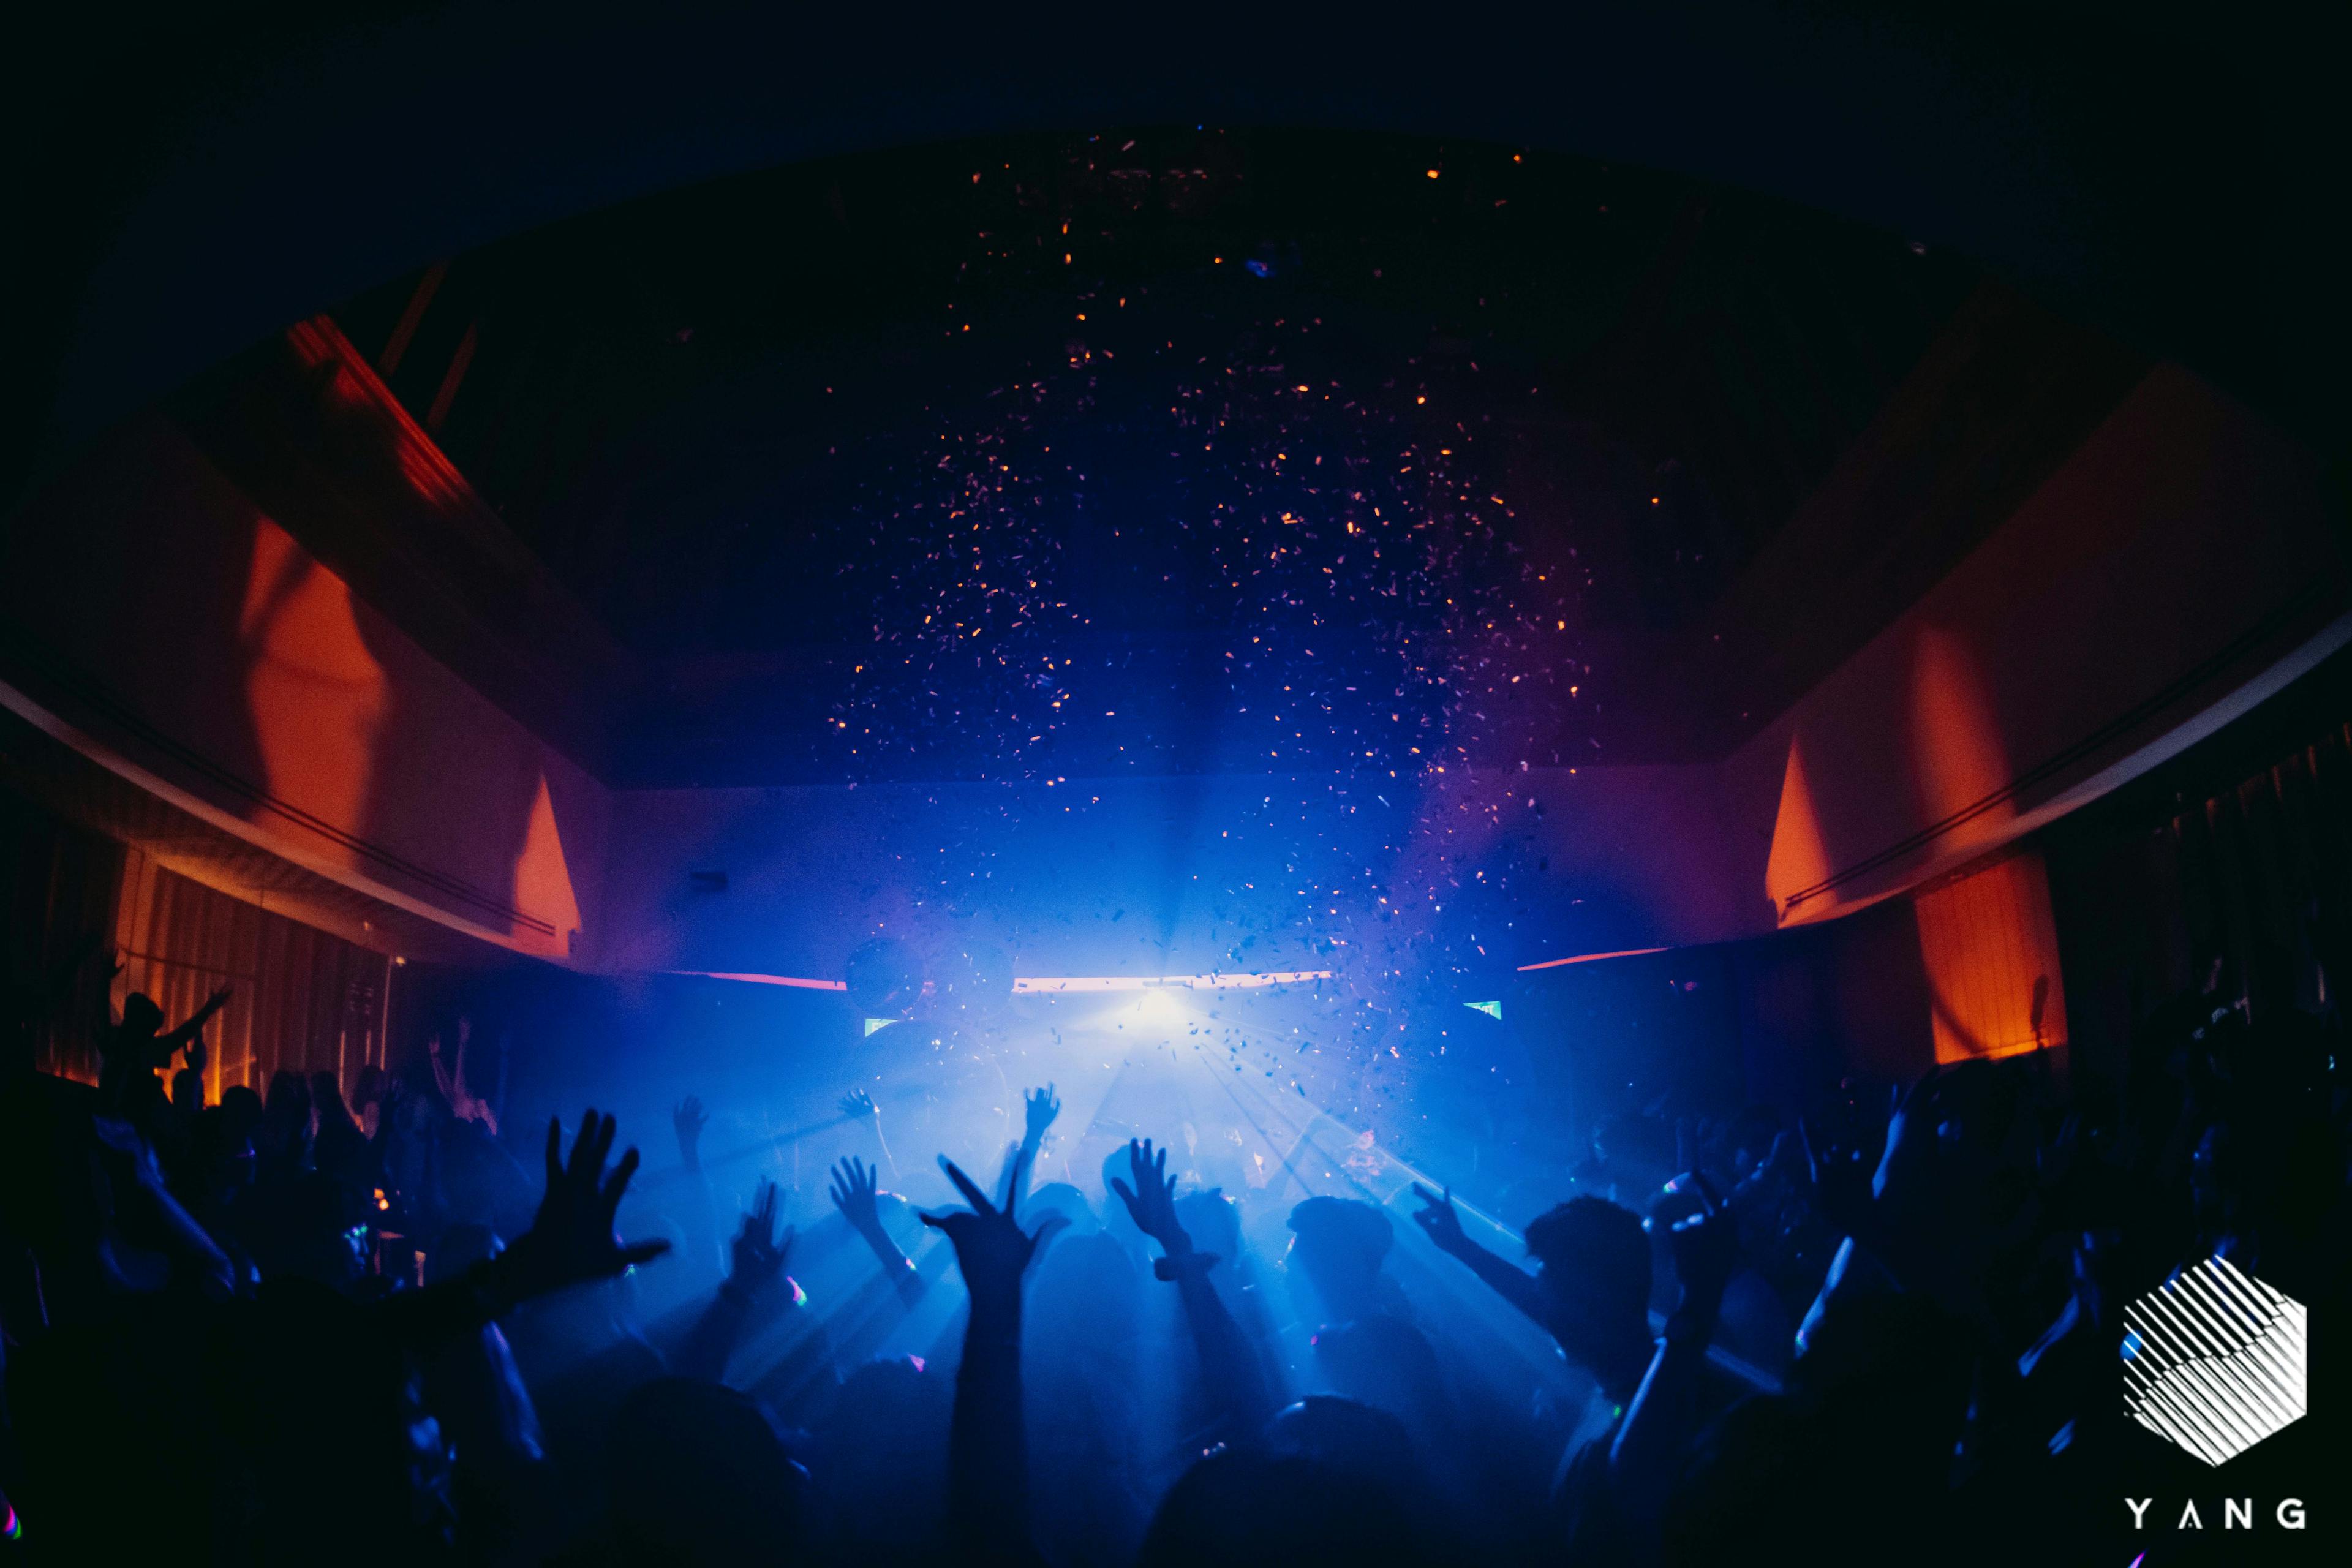 club night club urban disco concert person crowd lighting